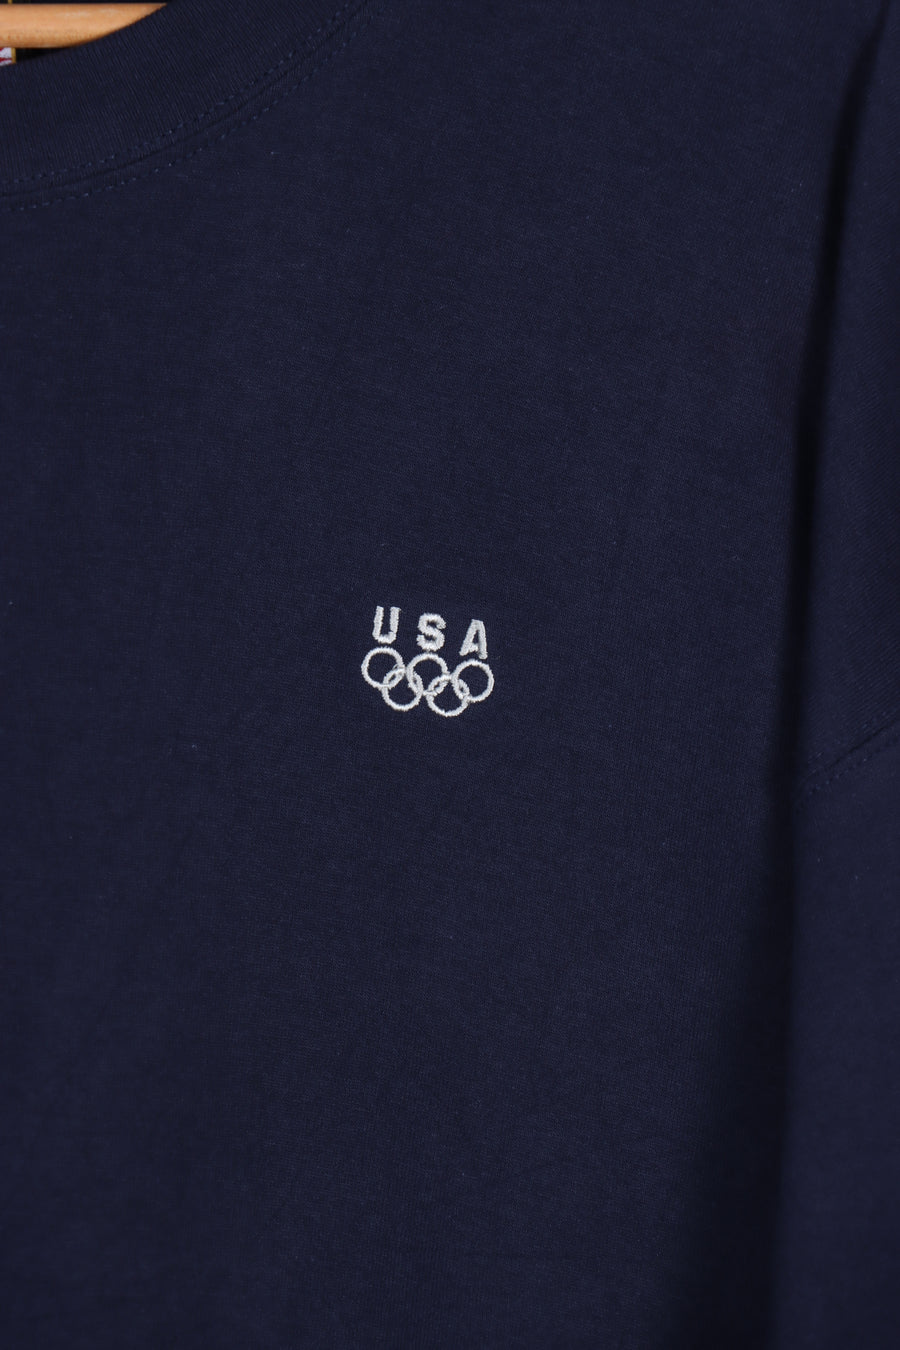 USA Olympic Team Embroidered Rings JC USA Made Tee (XXL)